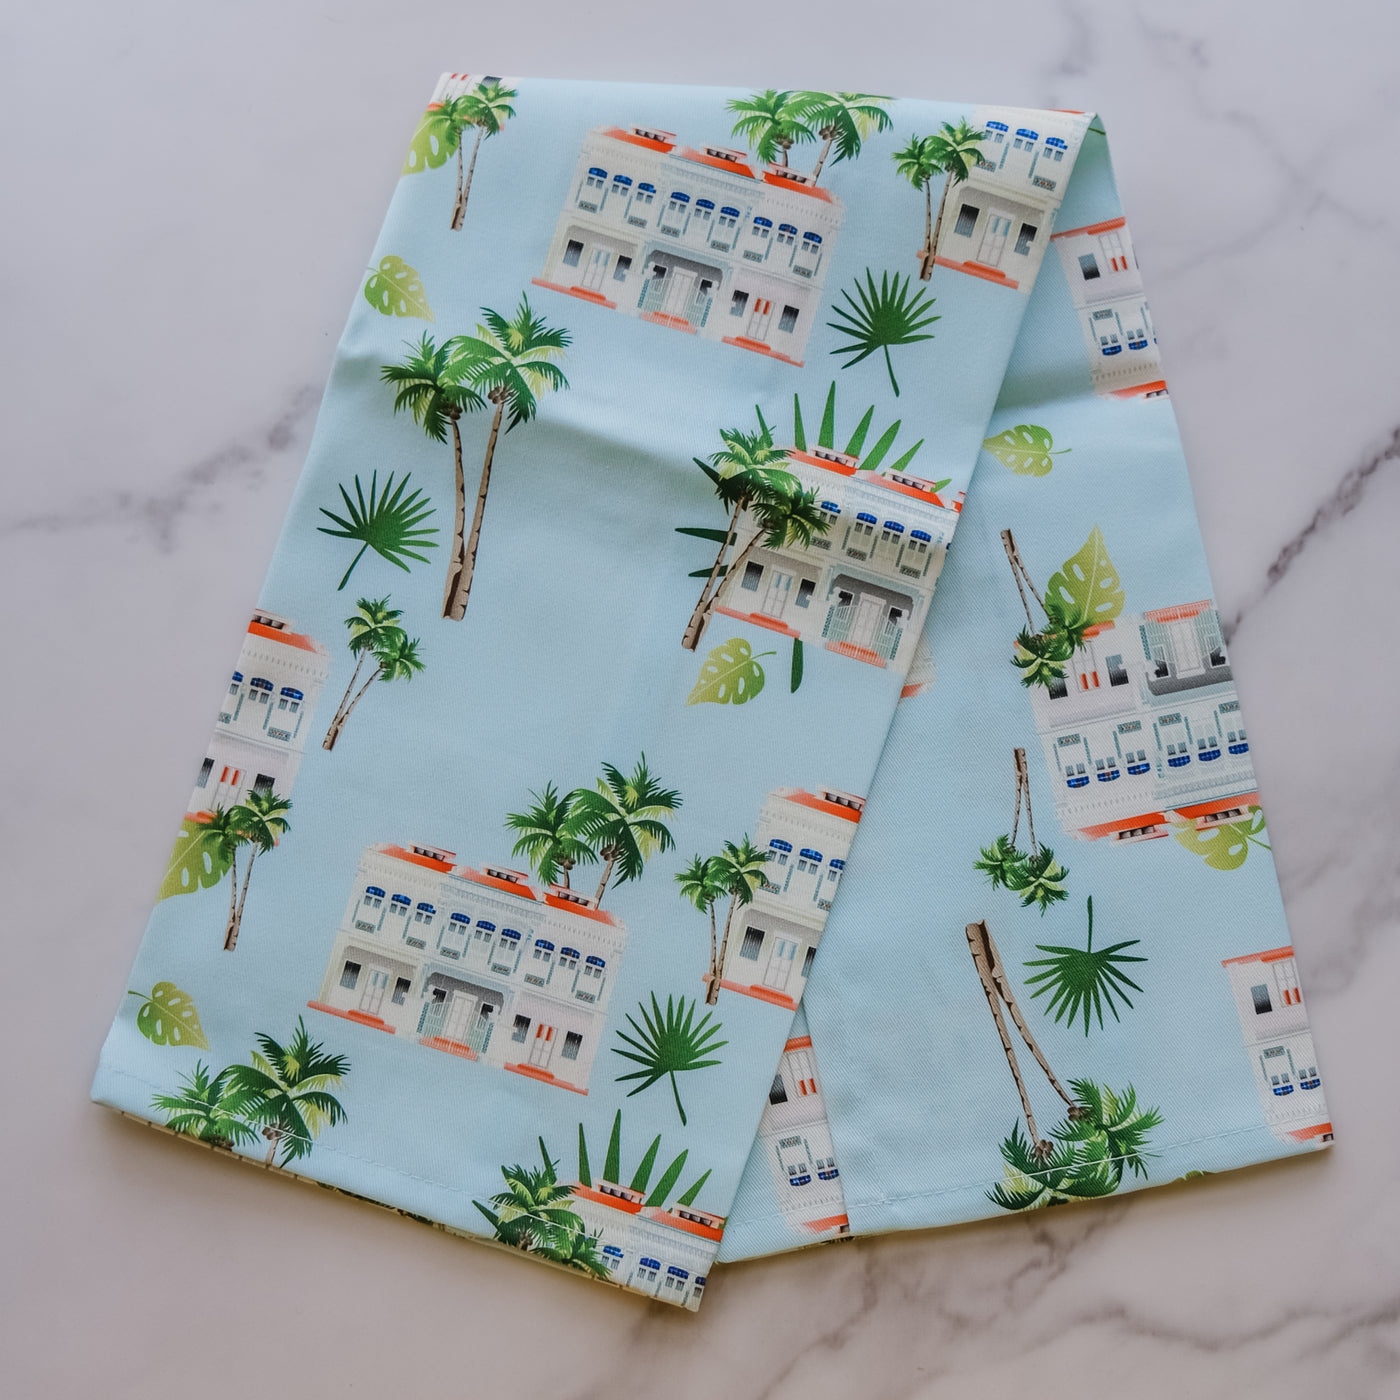 Singapore - Blue Shophouse Tea Towel